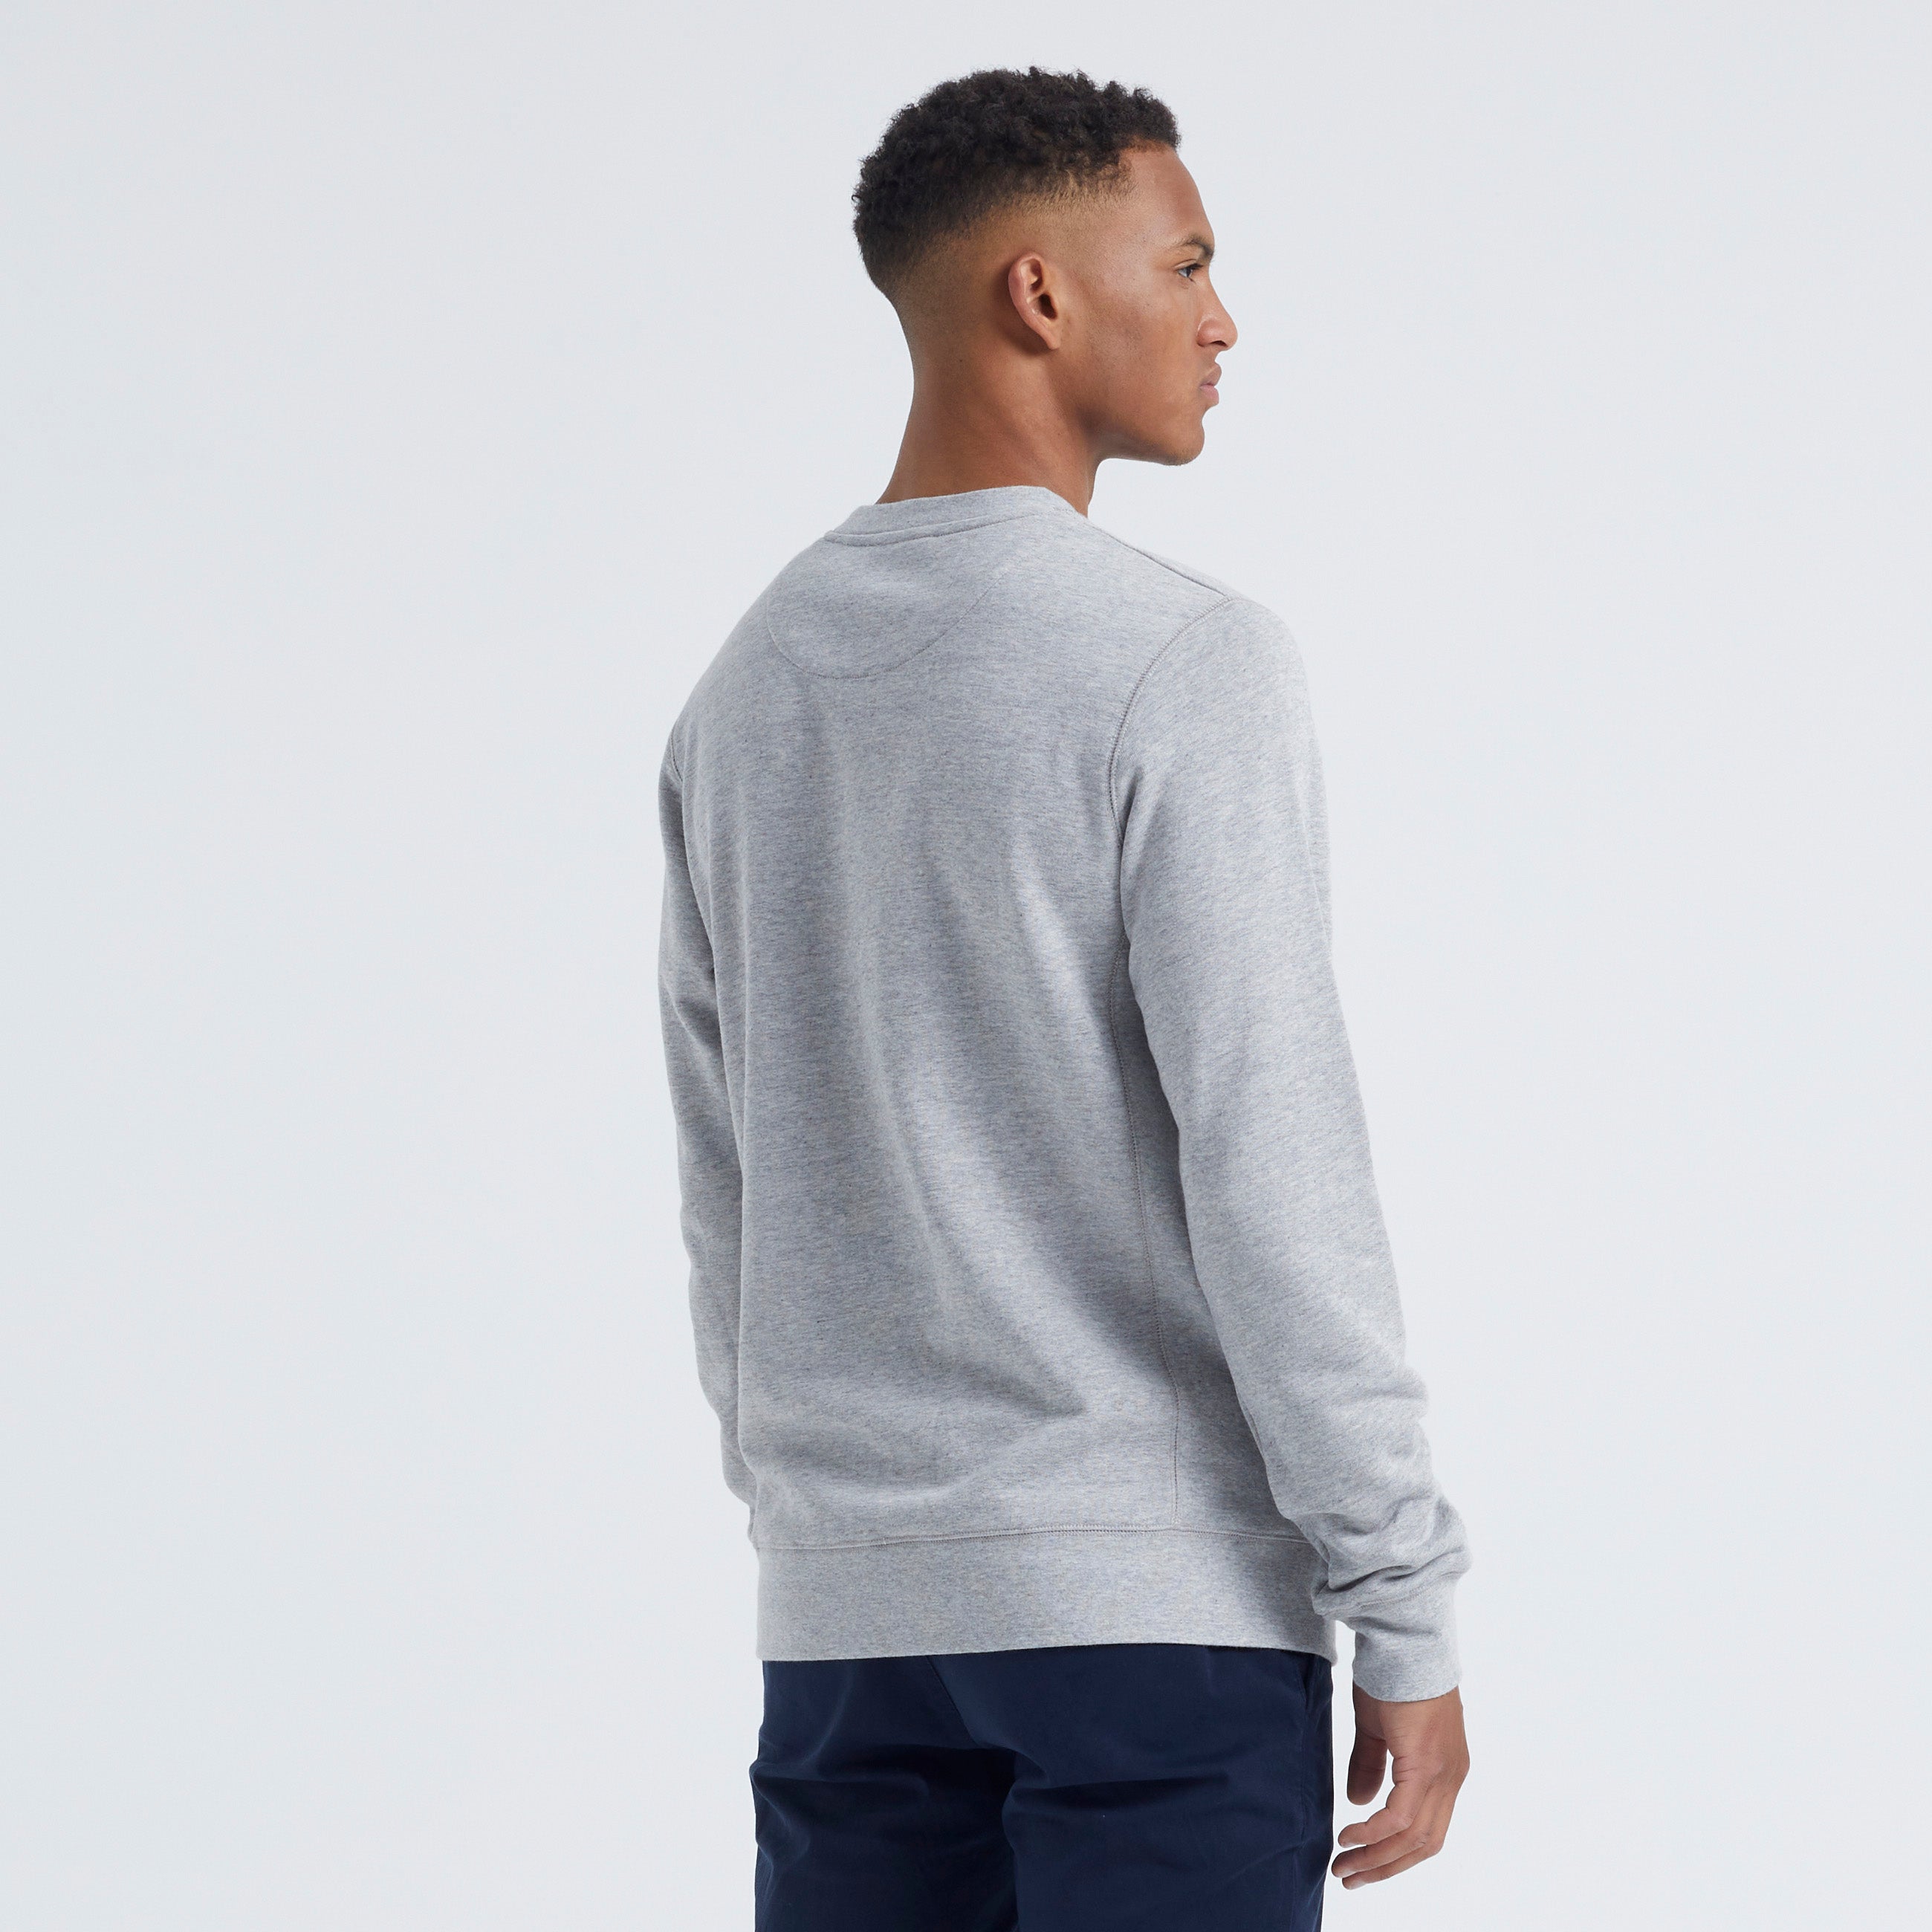 By Garment Makers The Organic Sweatshirt GOTS Sweatshirt 1145 Light Grey Melange